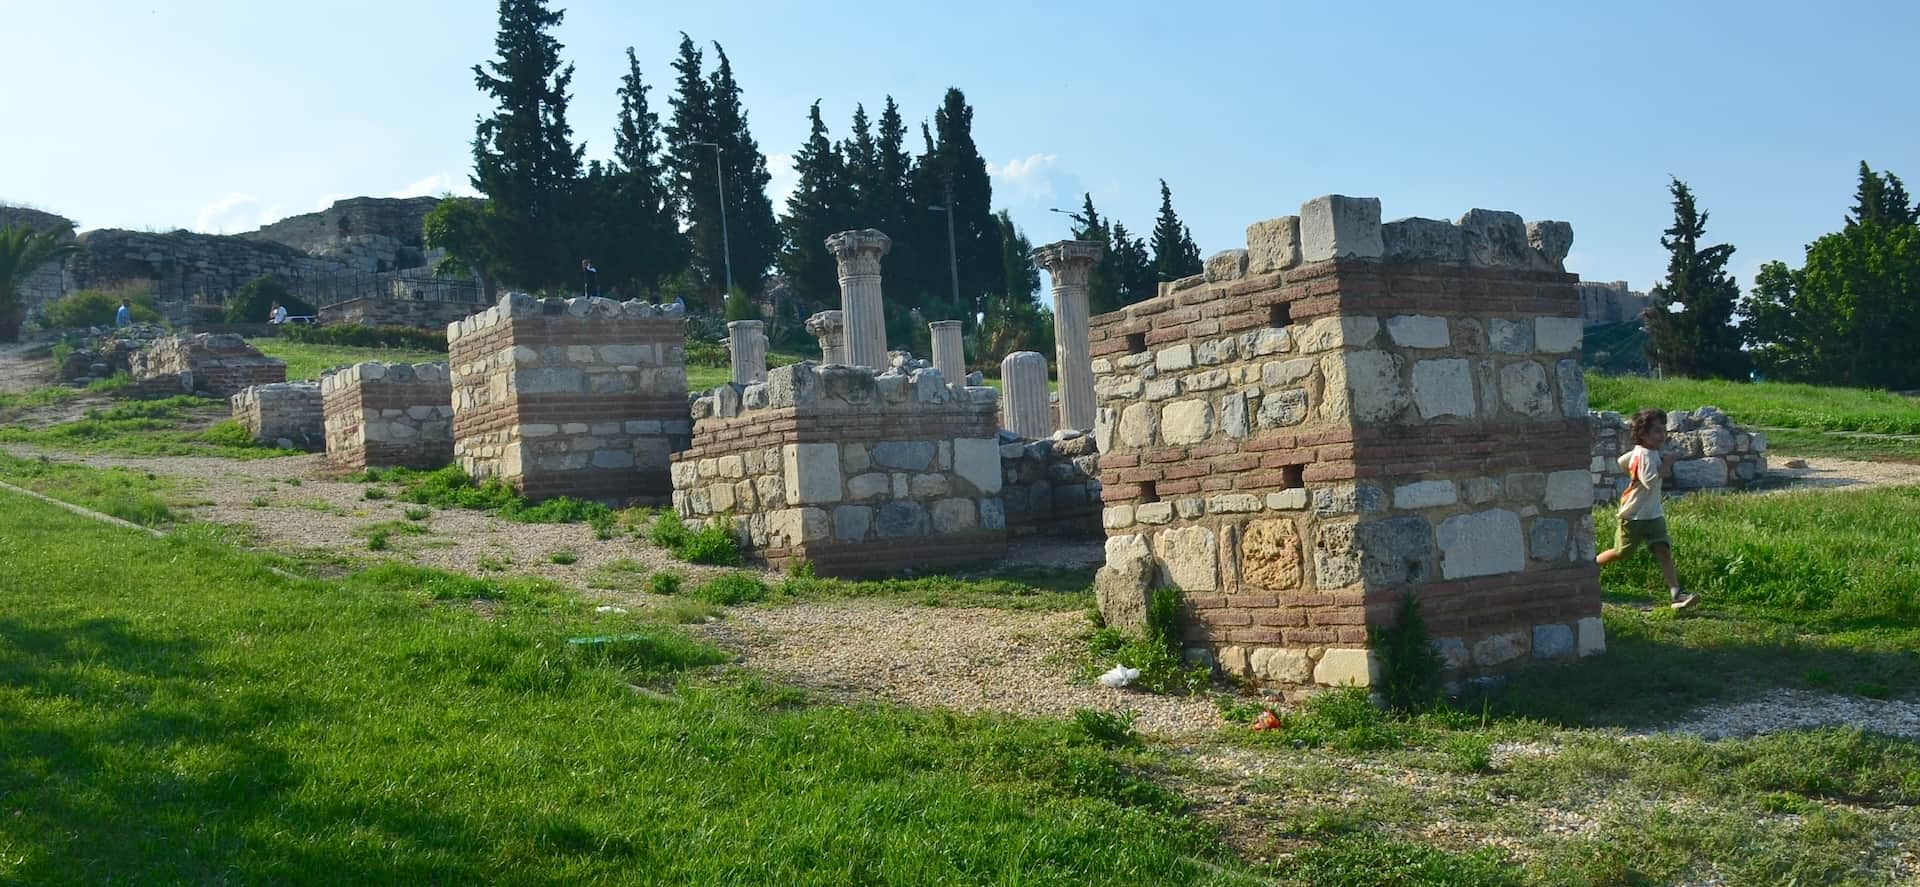 Bases of the Byzantine aqueduct